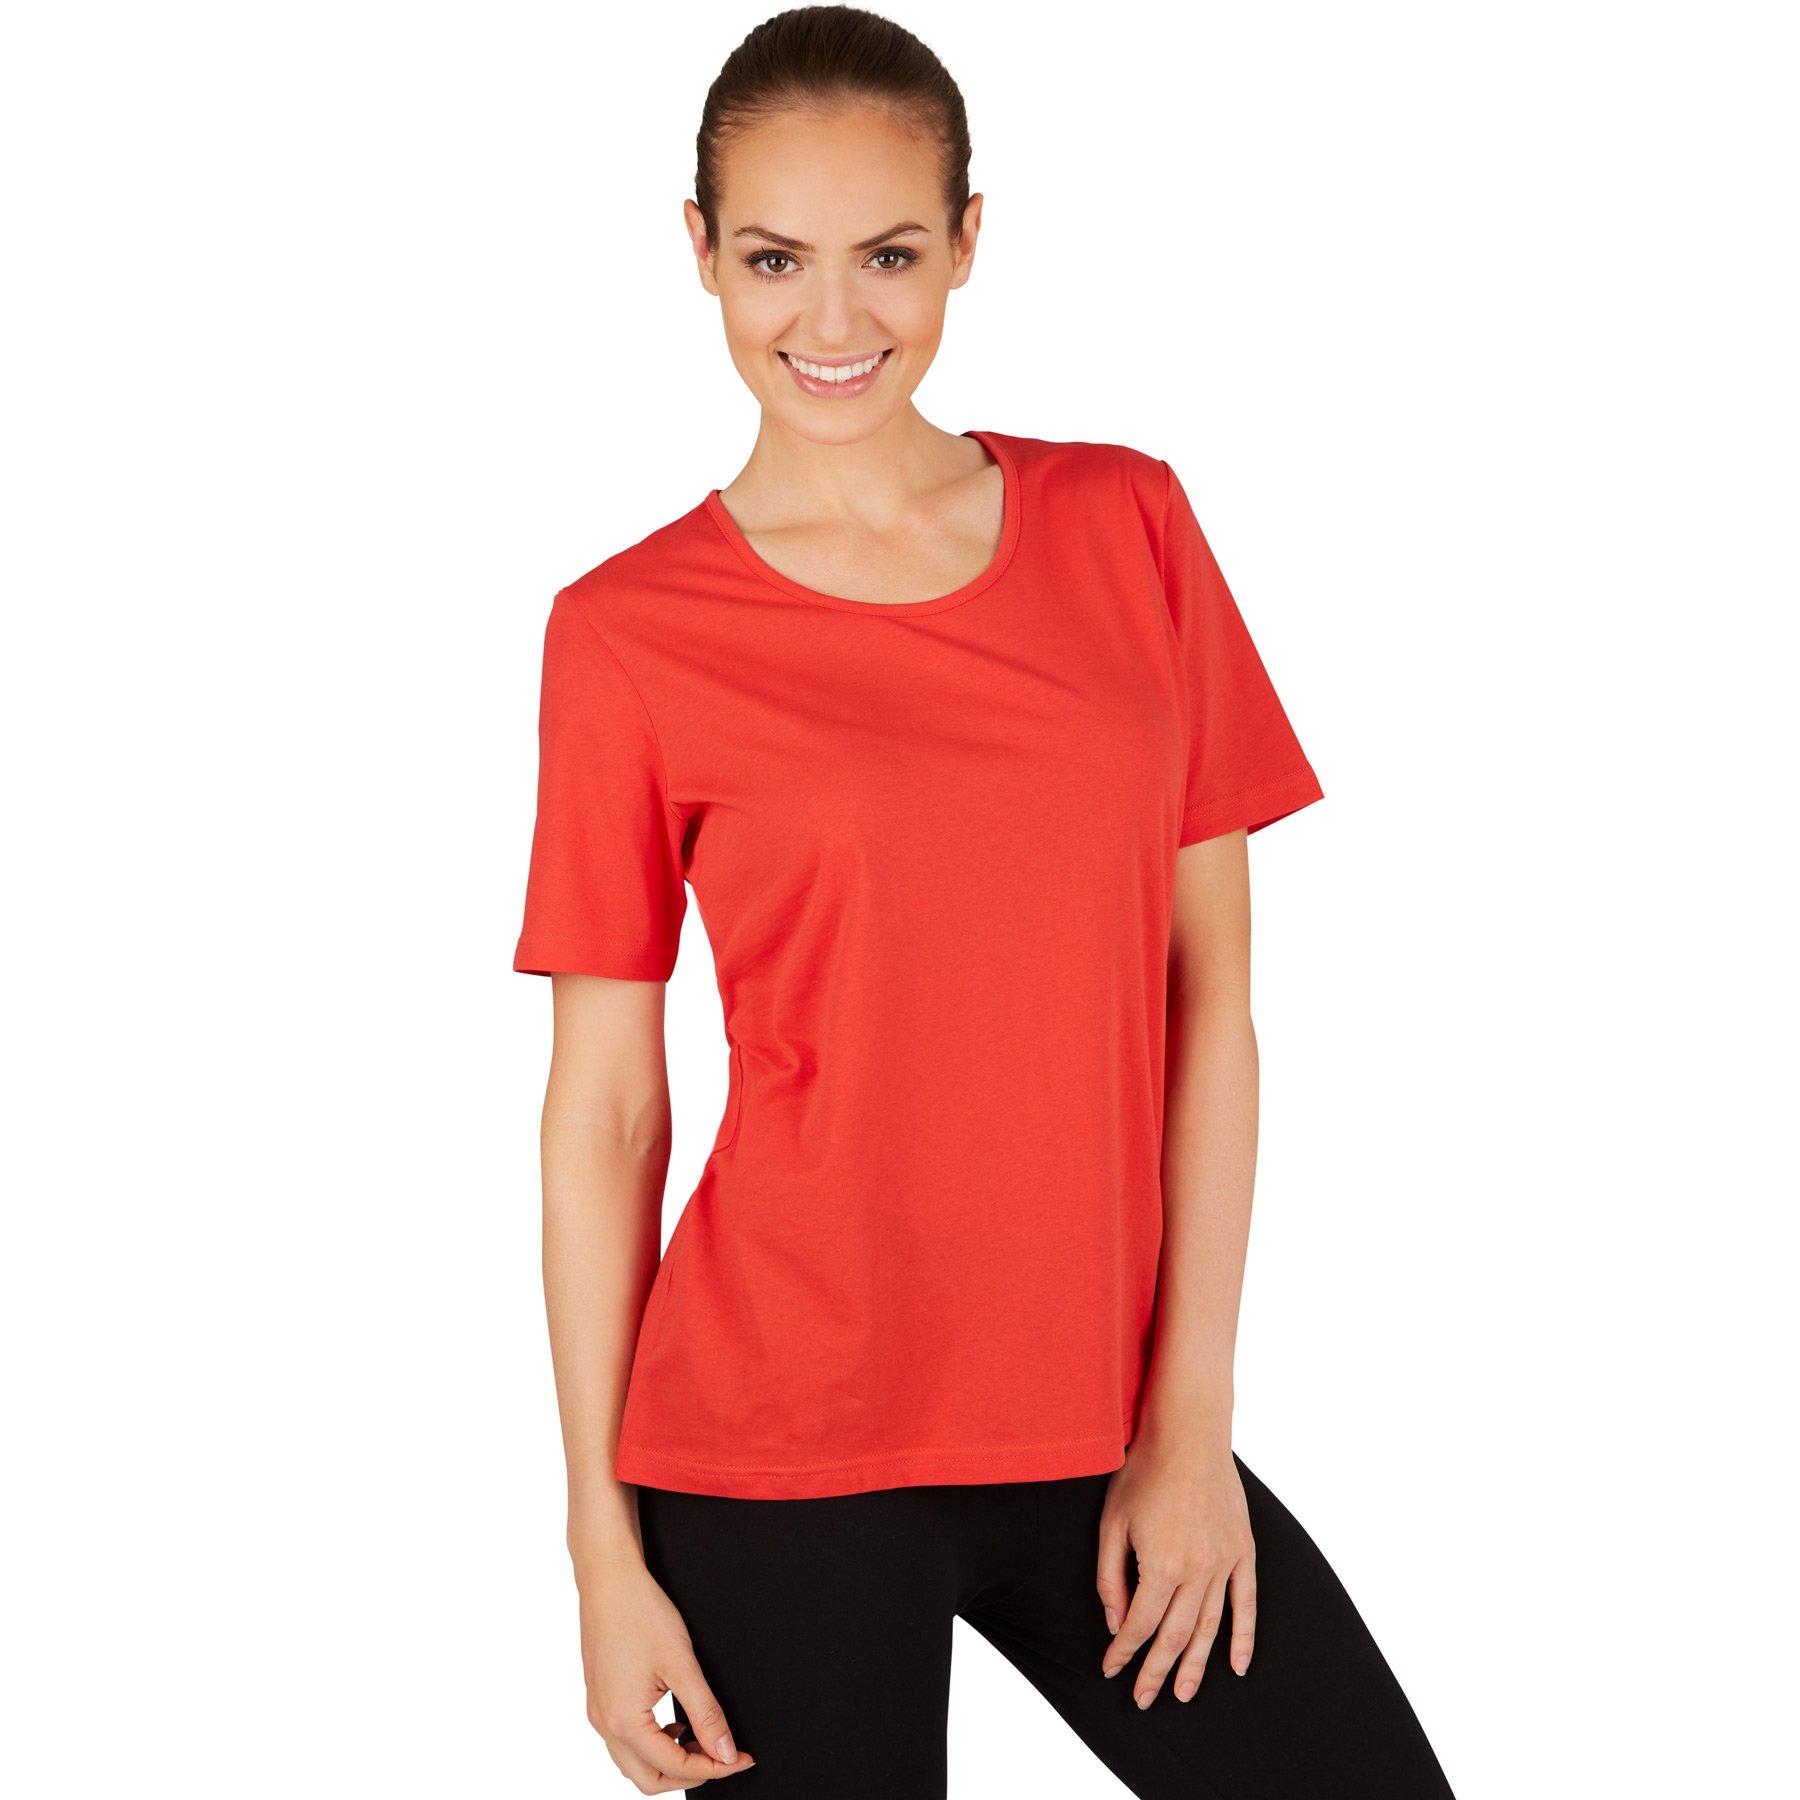 Frauen T-shirt Damen Rot XL von Tectake